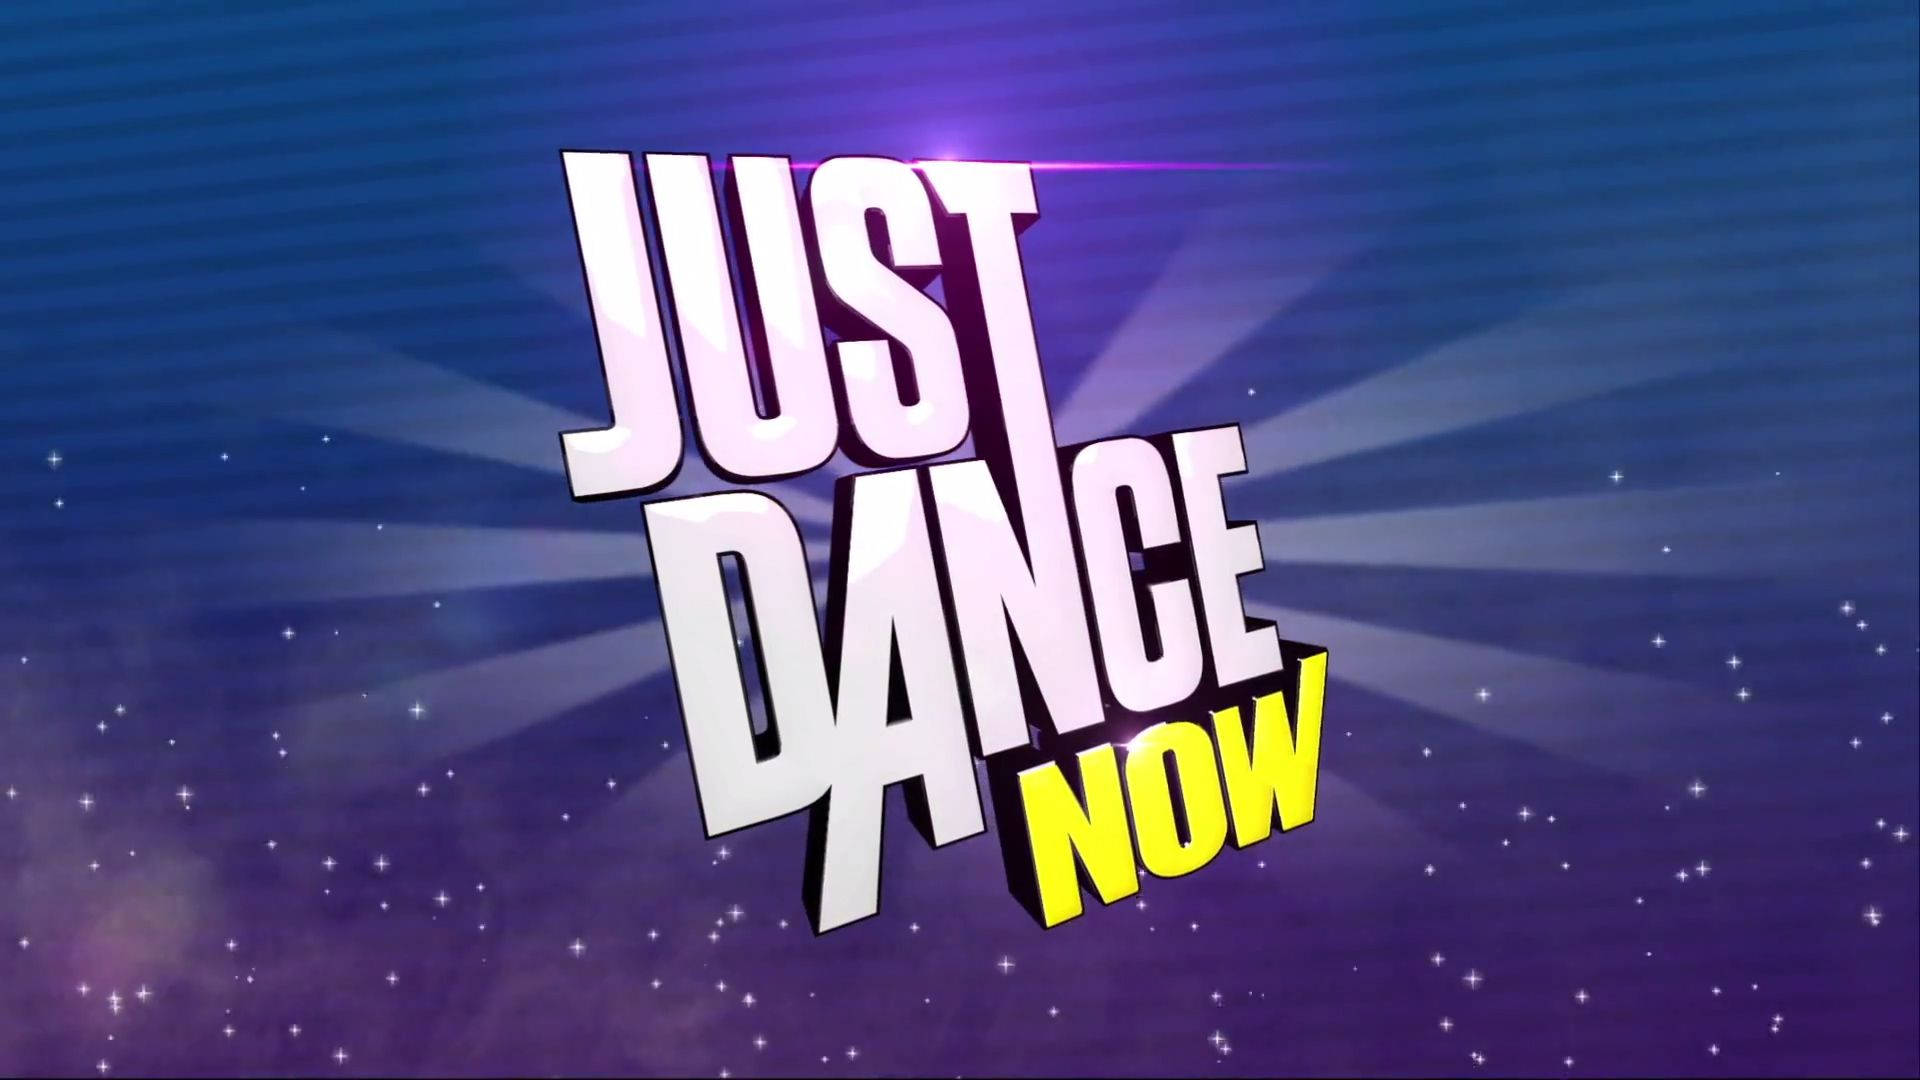 Just Dance Now Poster Wallpaper